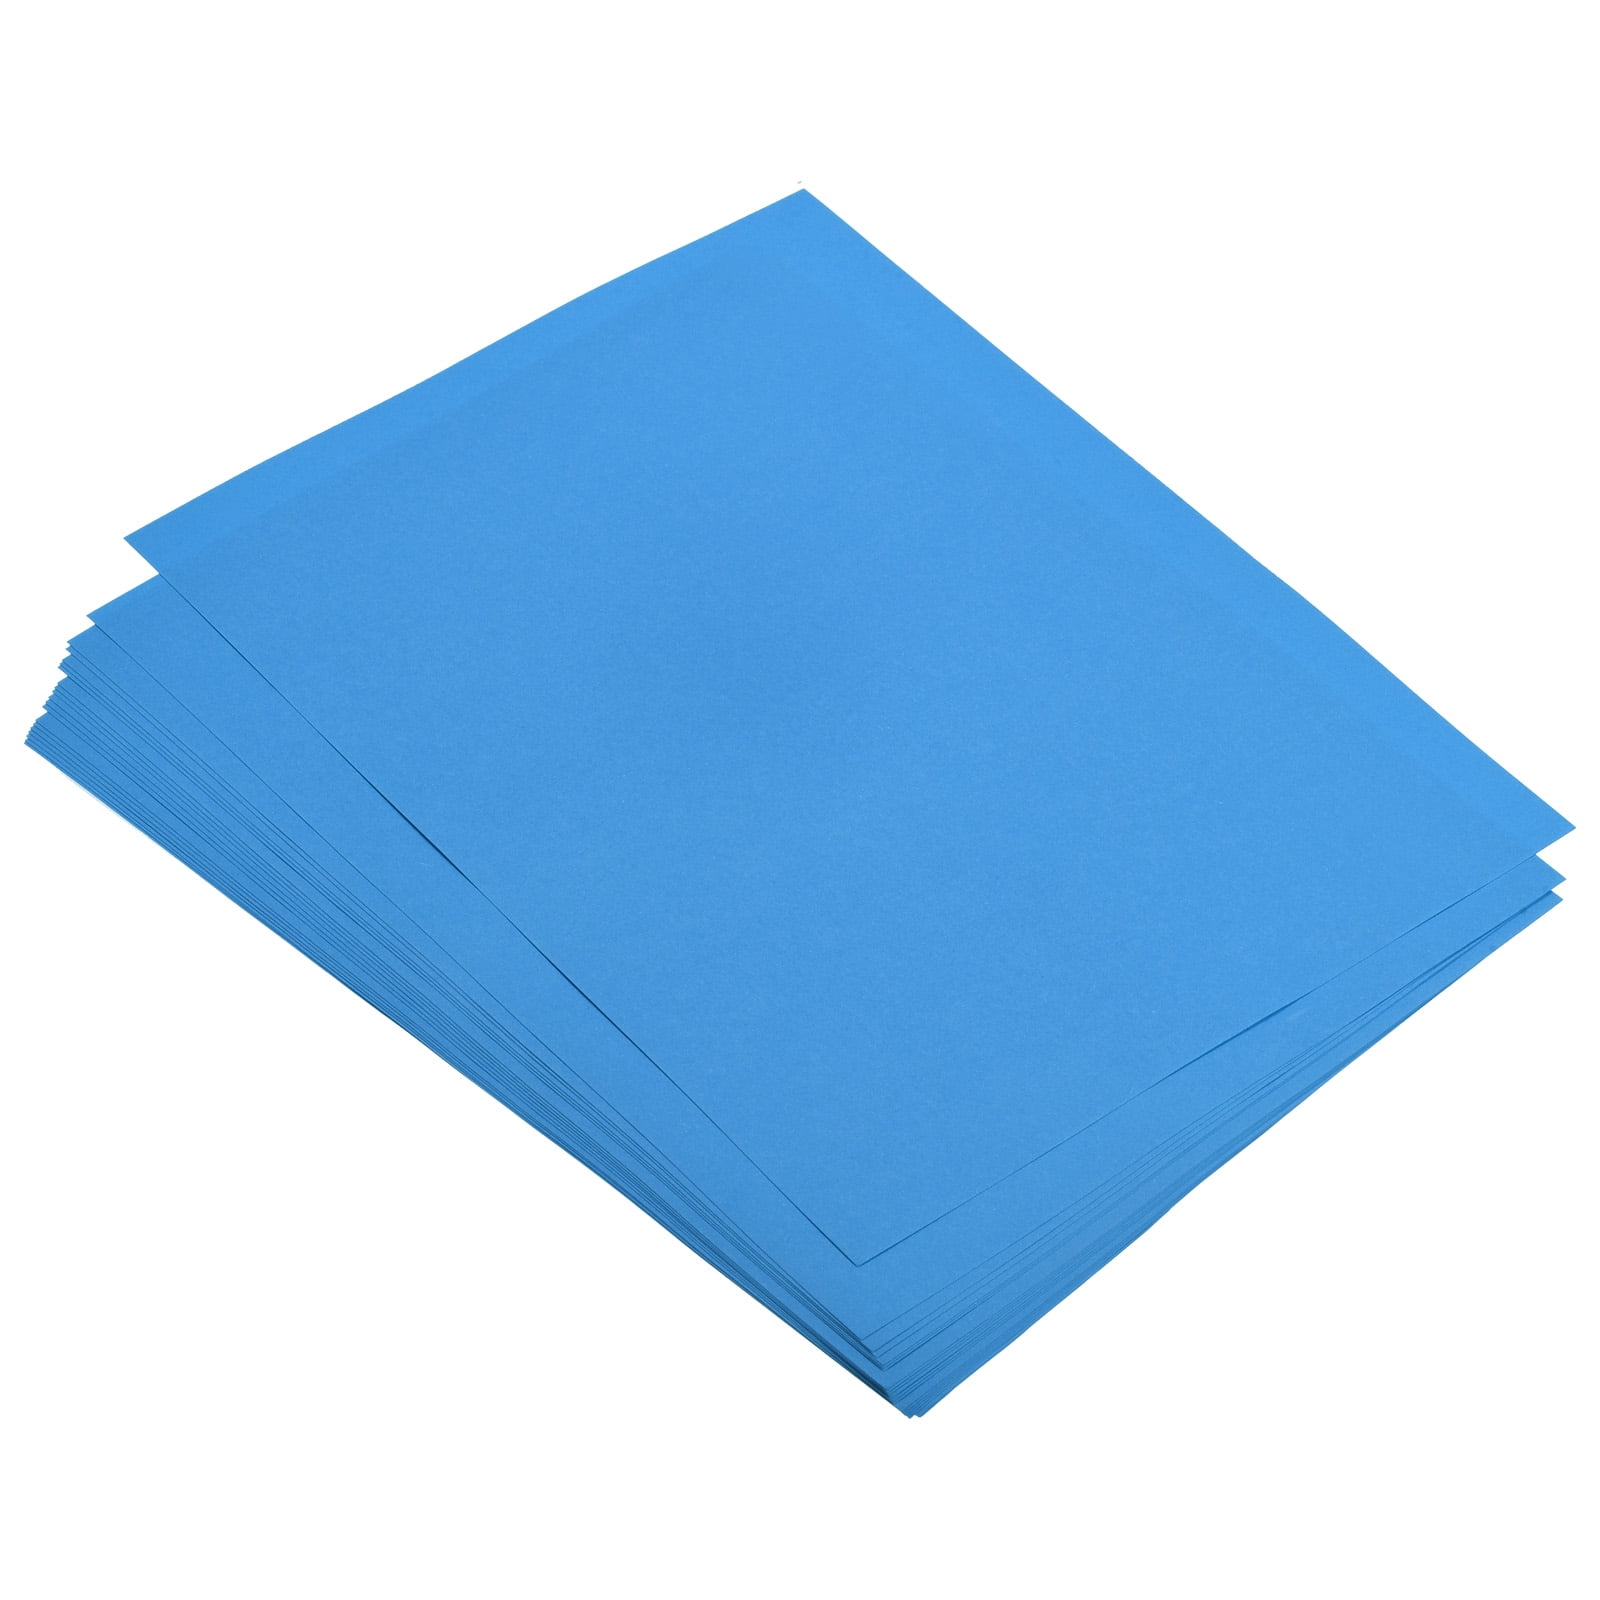  1InTheOffice Blue Copy Paper 8.5 X 11, Colored Copy Paper,  Letter Size, 20lb Density